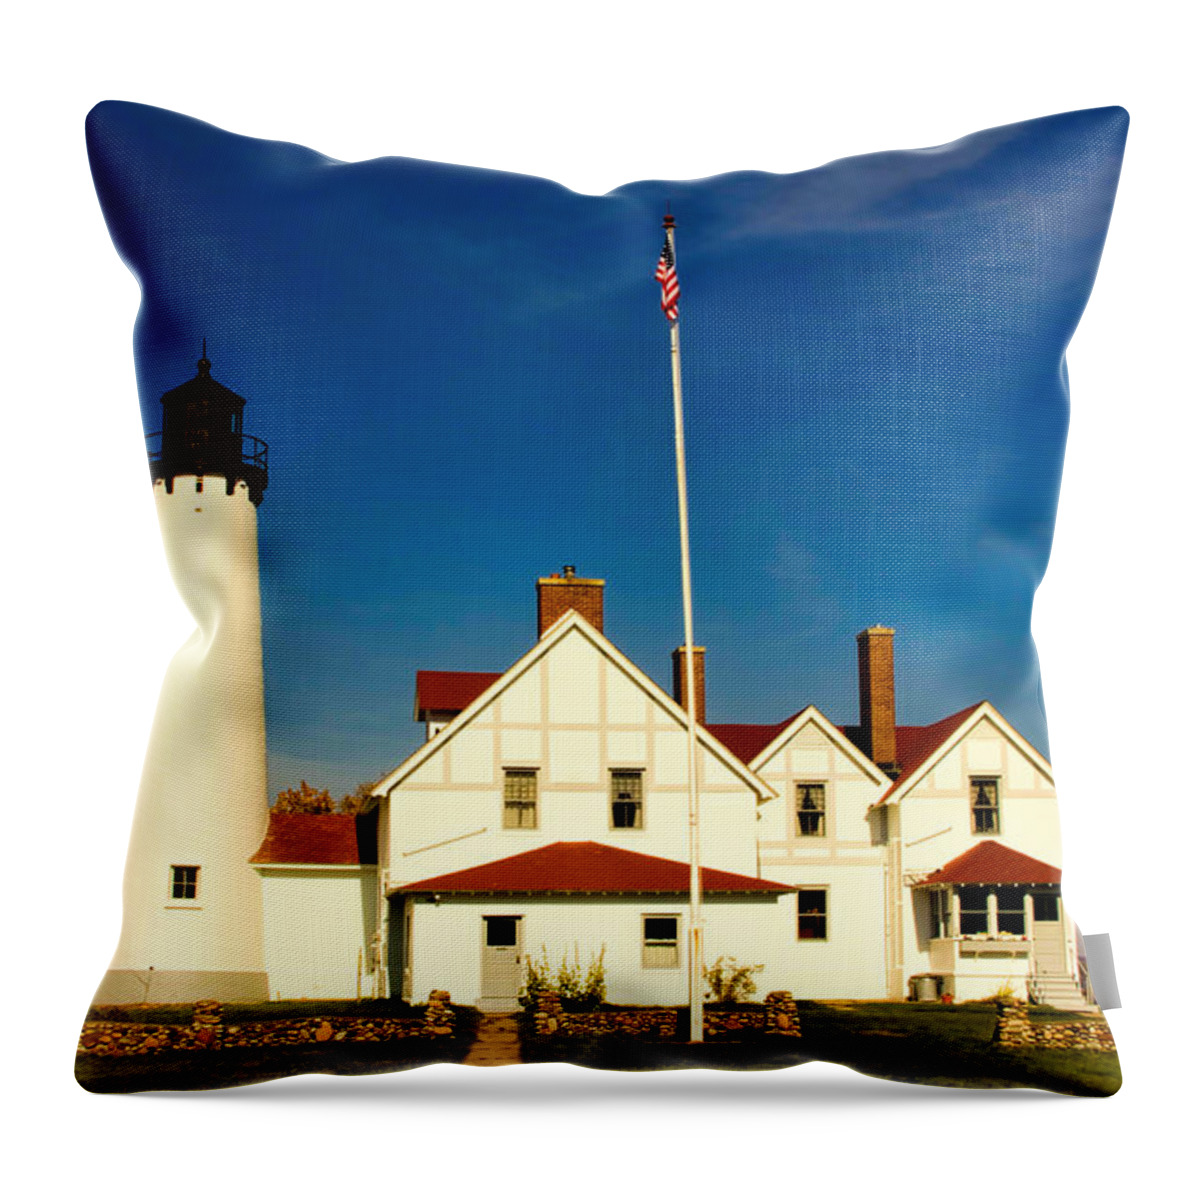 Point Iroquois Lighthouse Throw Pillow featuring the photograph Point Iroquois Lighthouse by Pat Cook